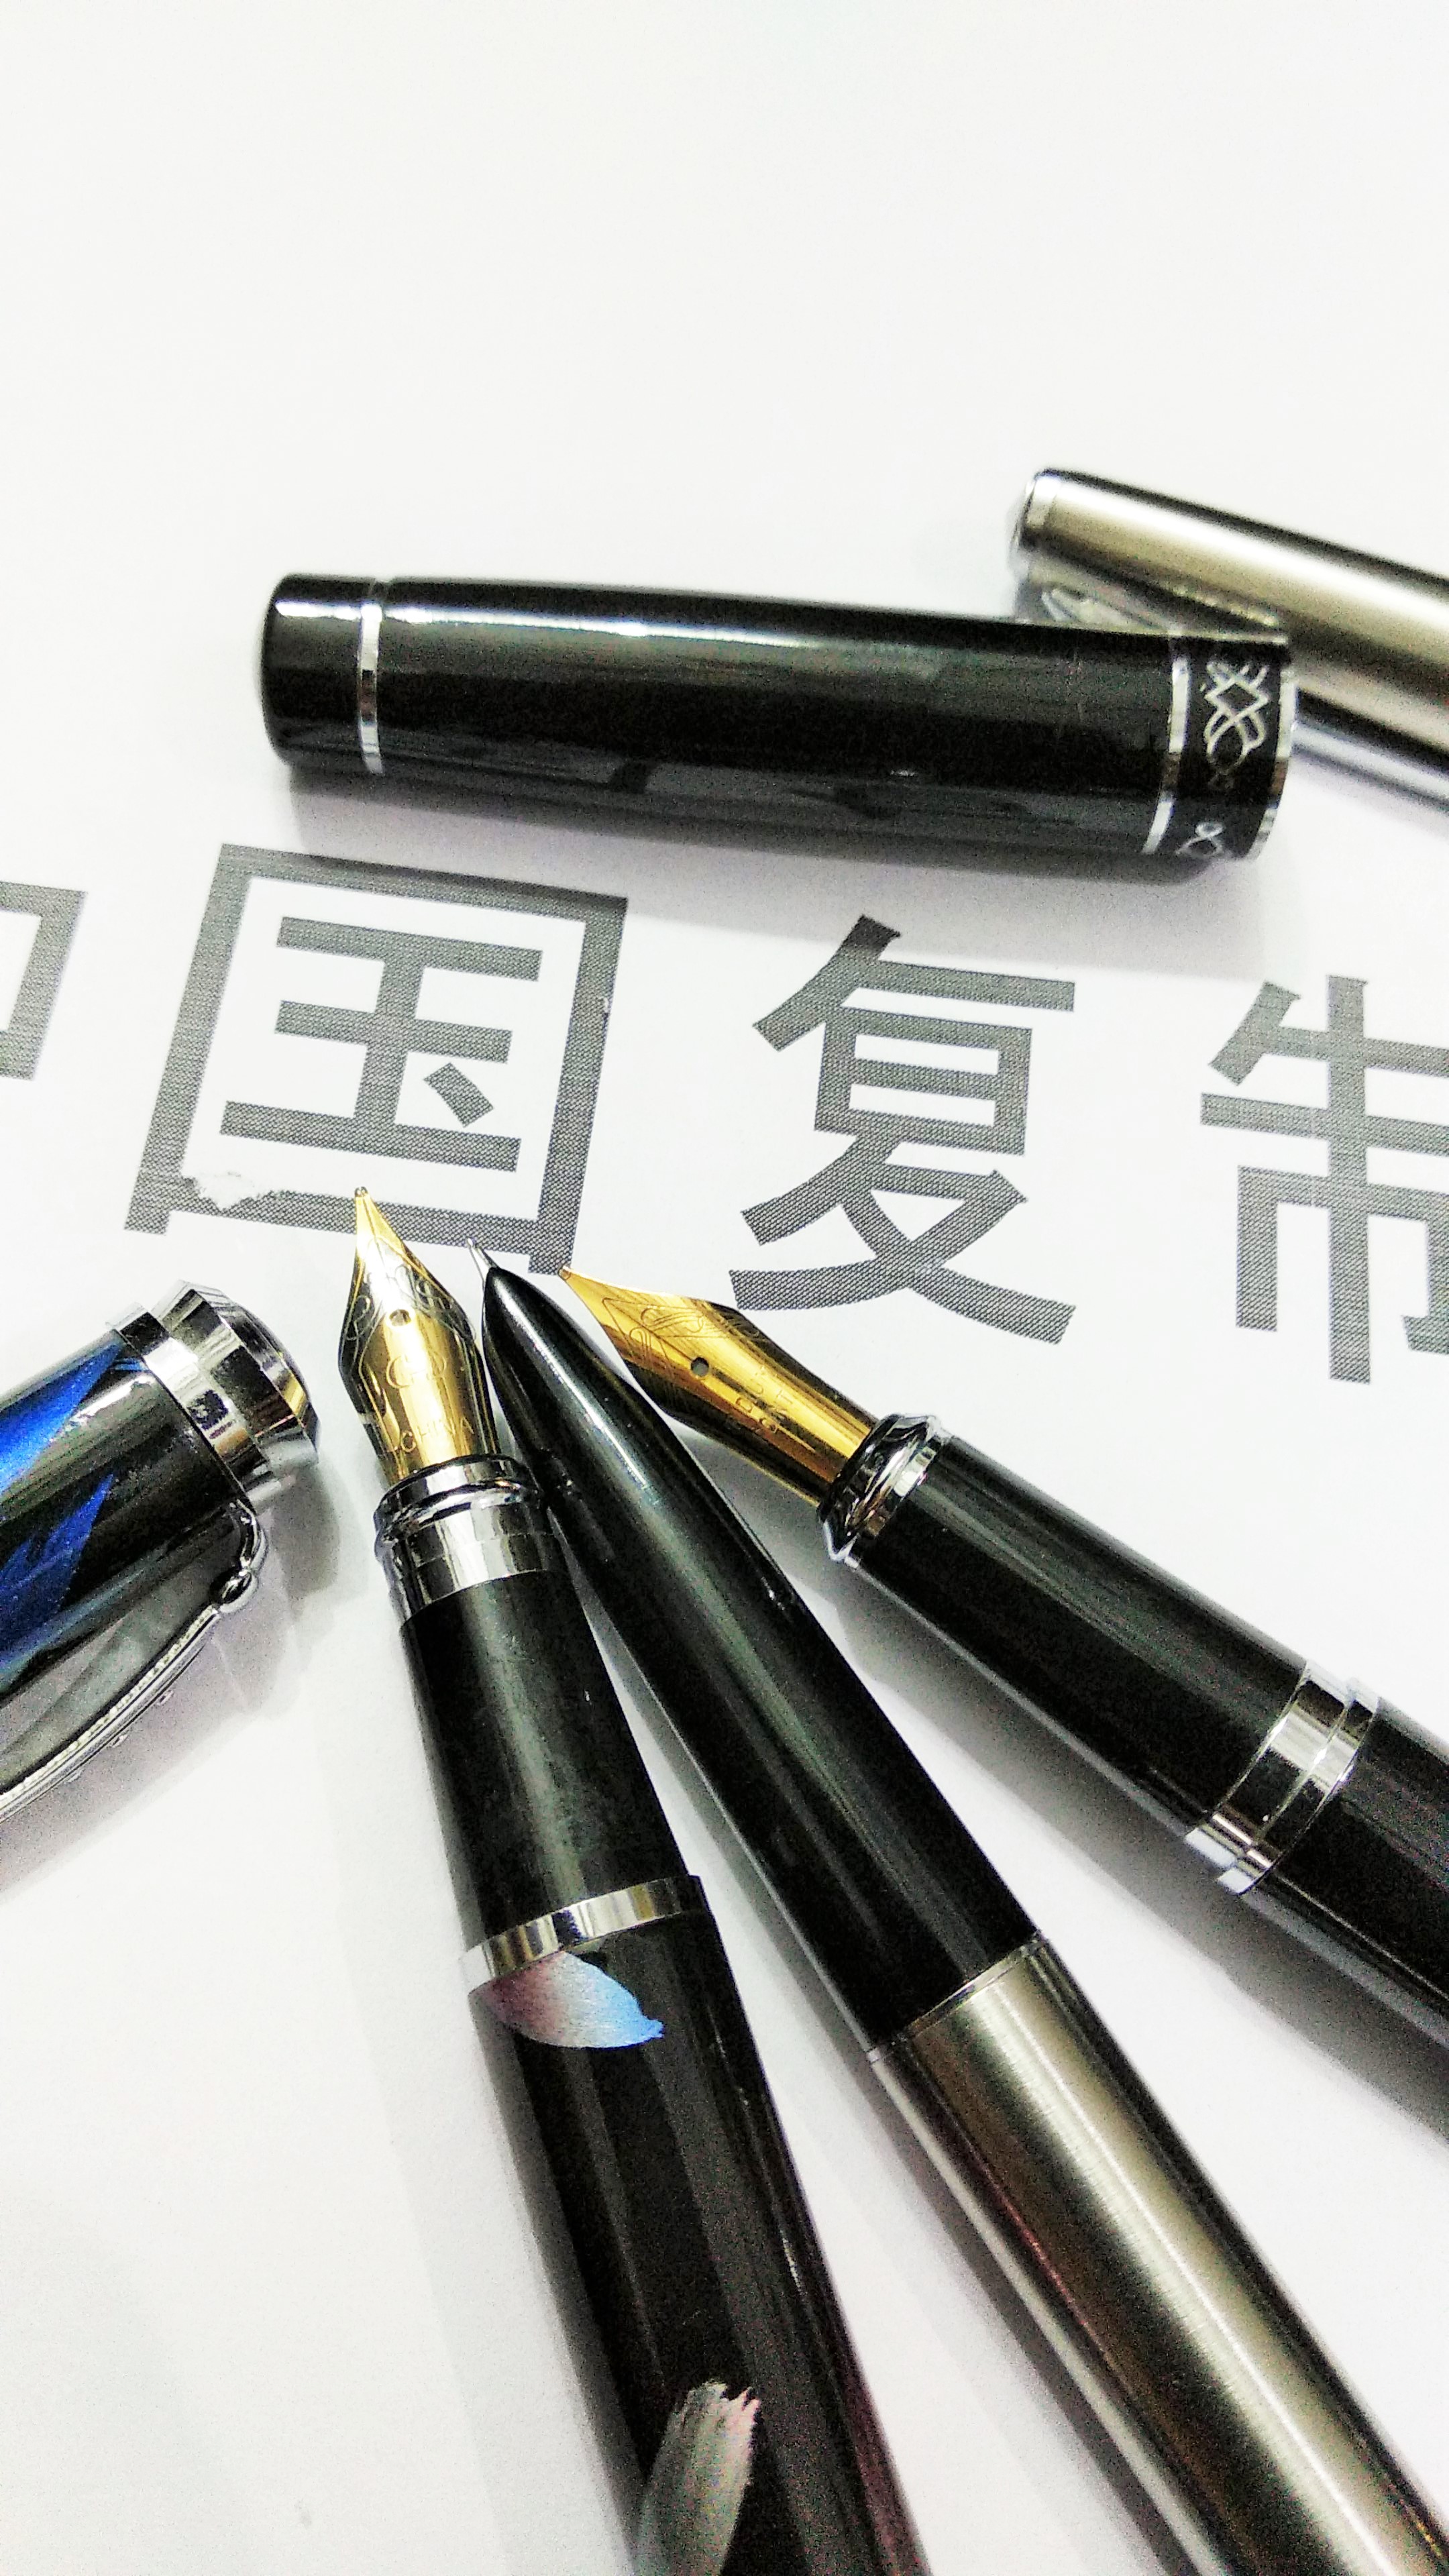 Chinese replica pens